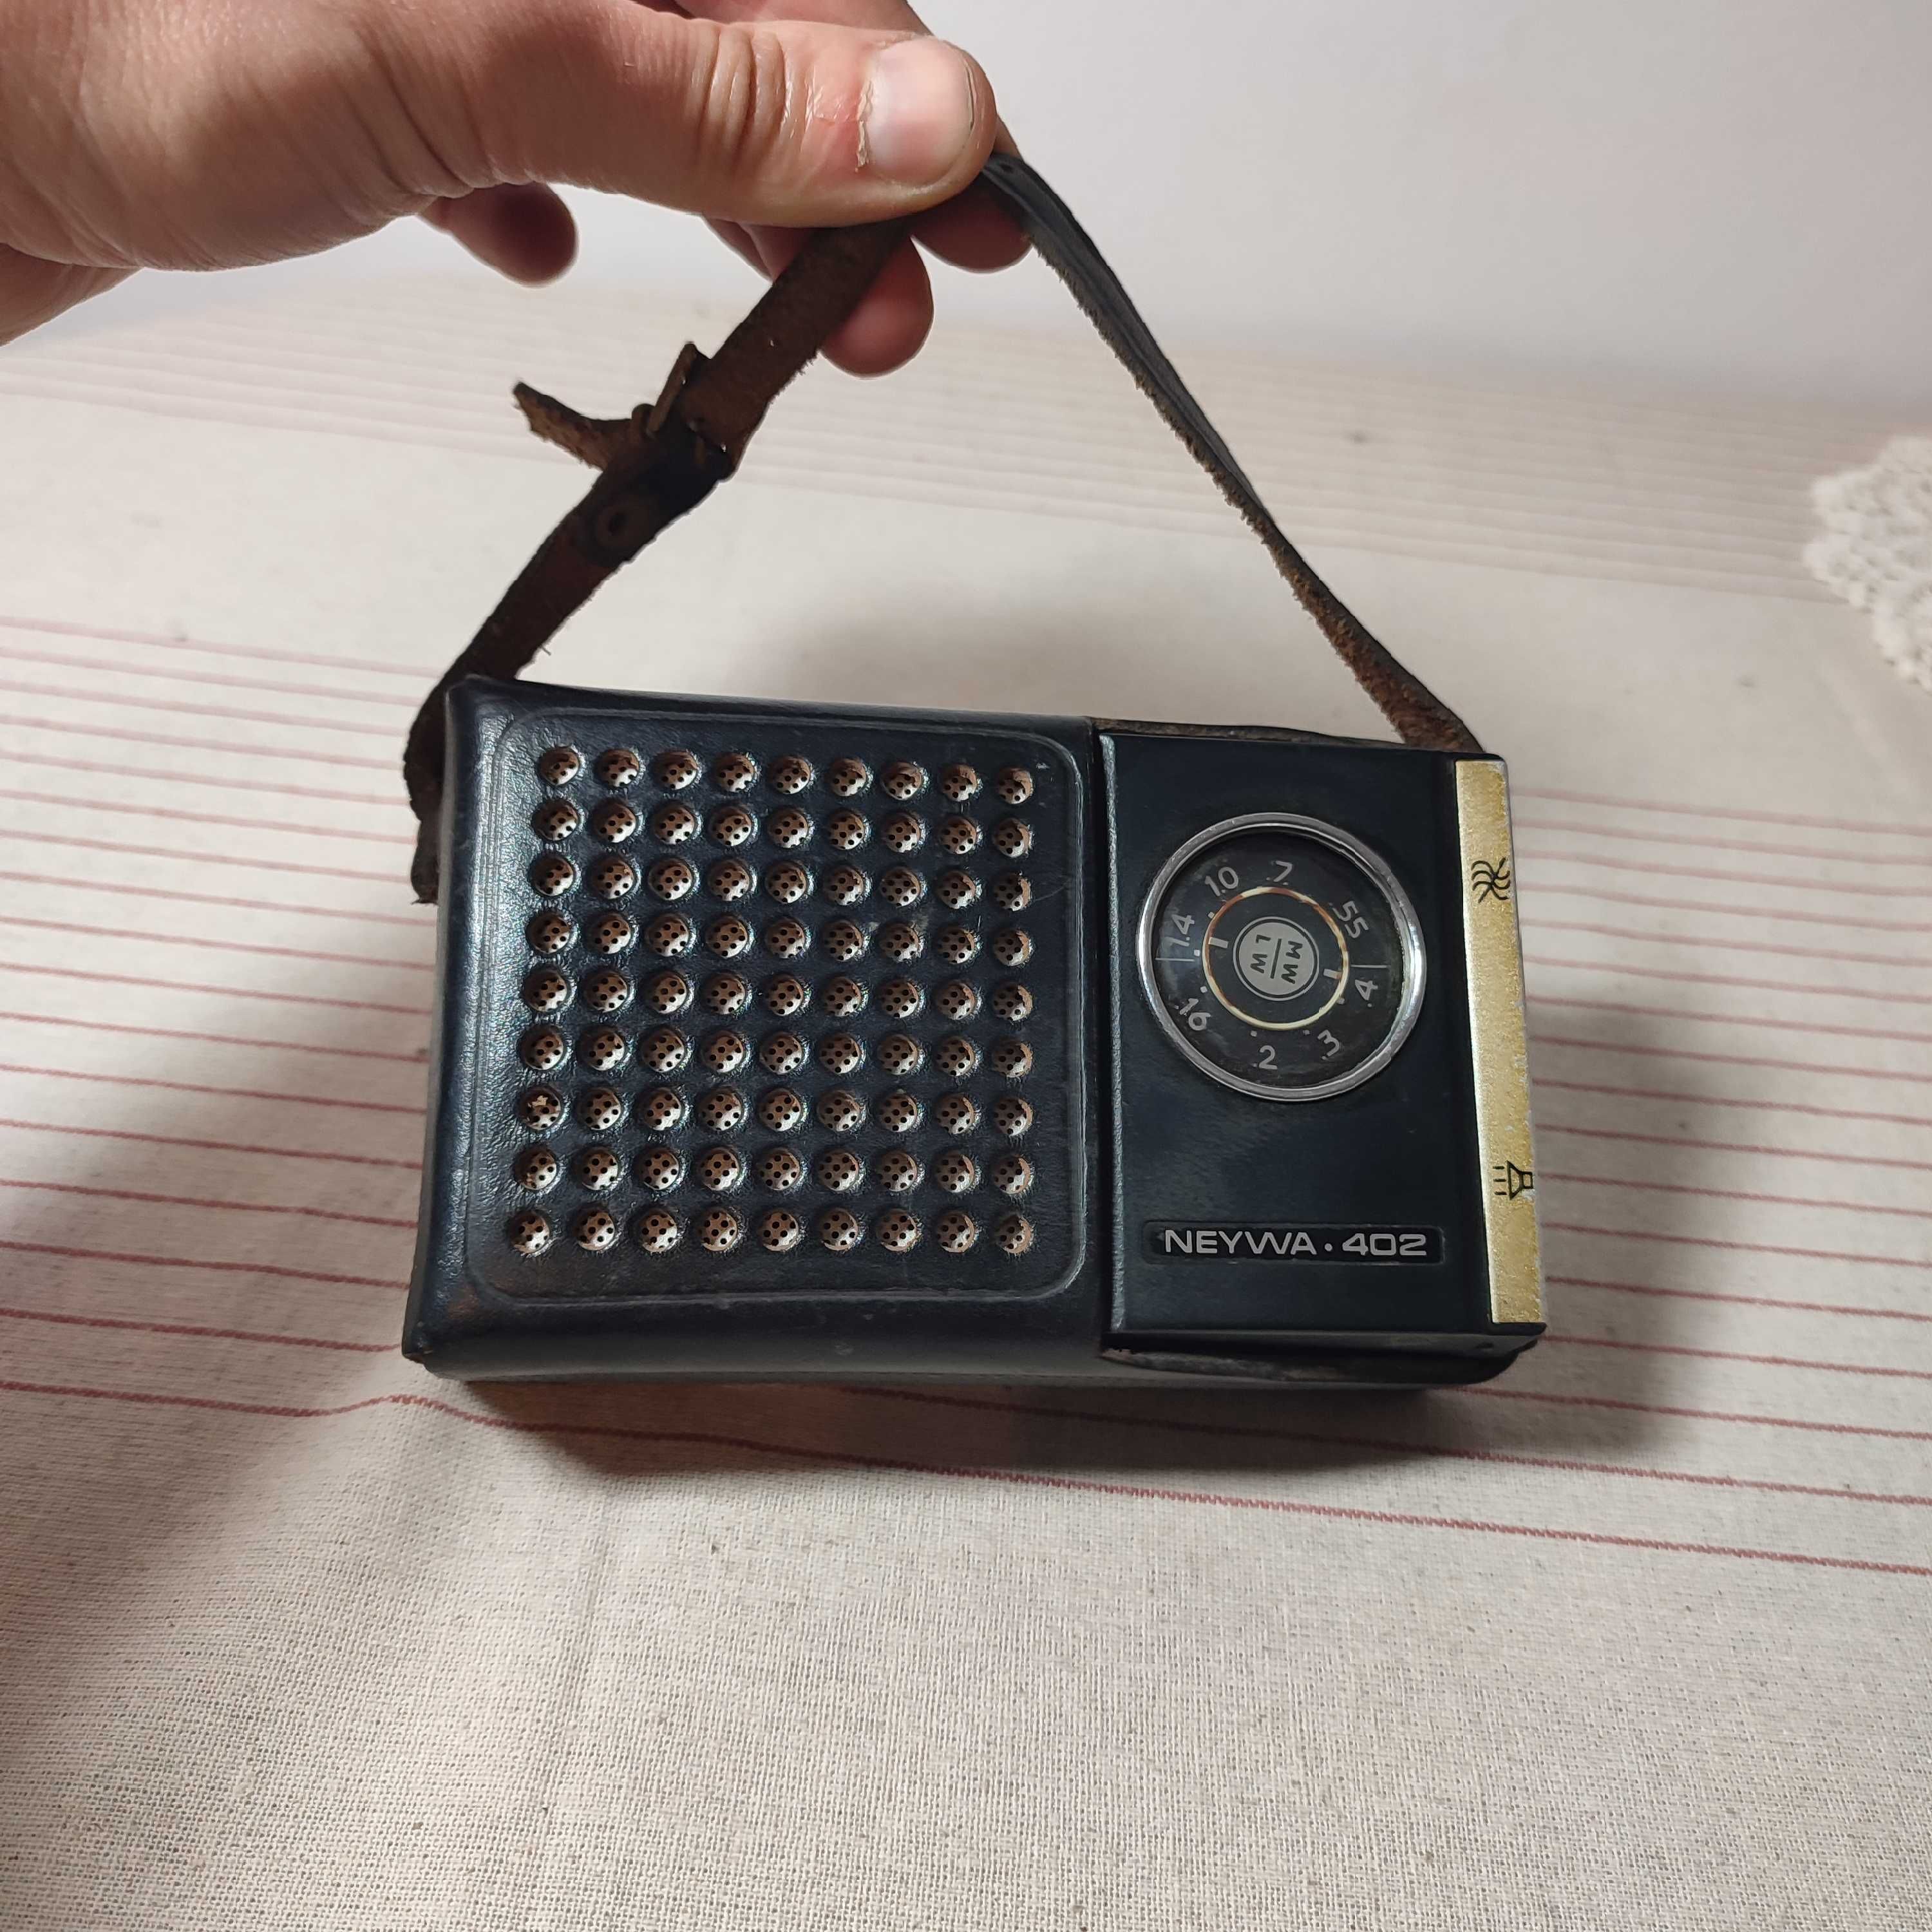 Stare radio Neywa 402 Sprawne